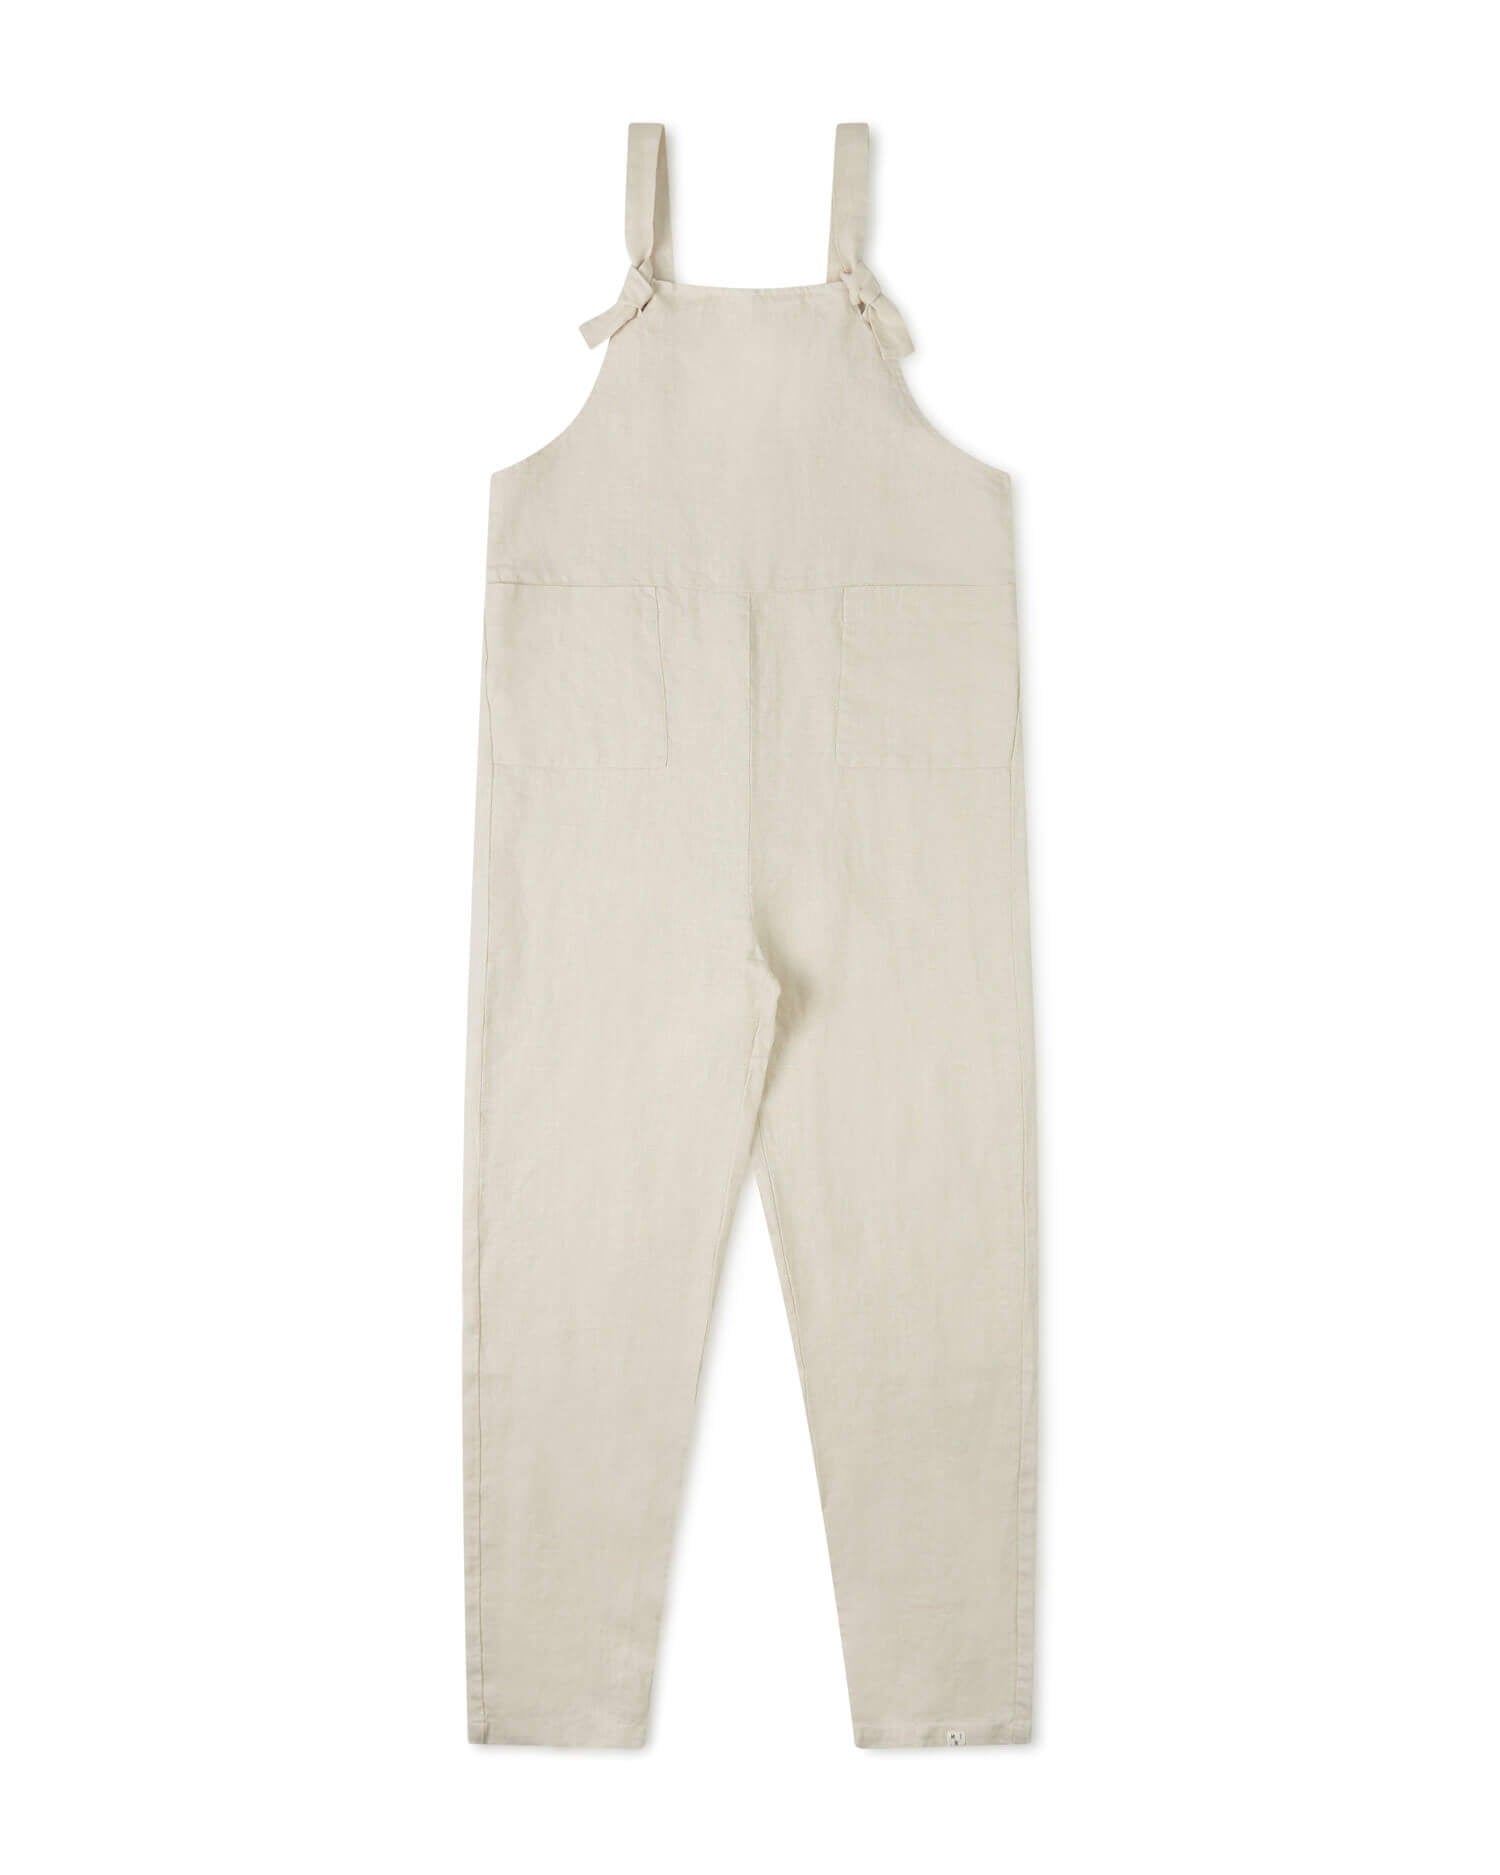 White linen overalls from Matona